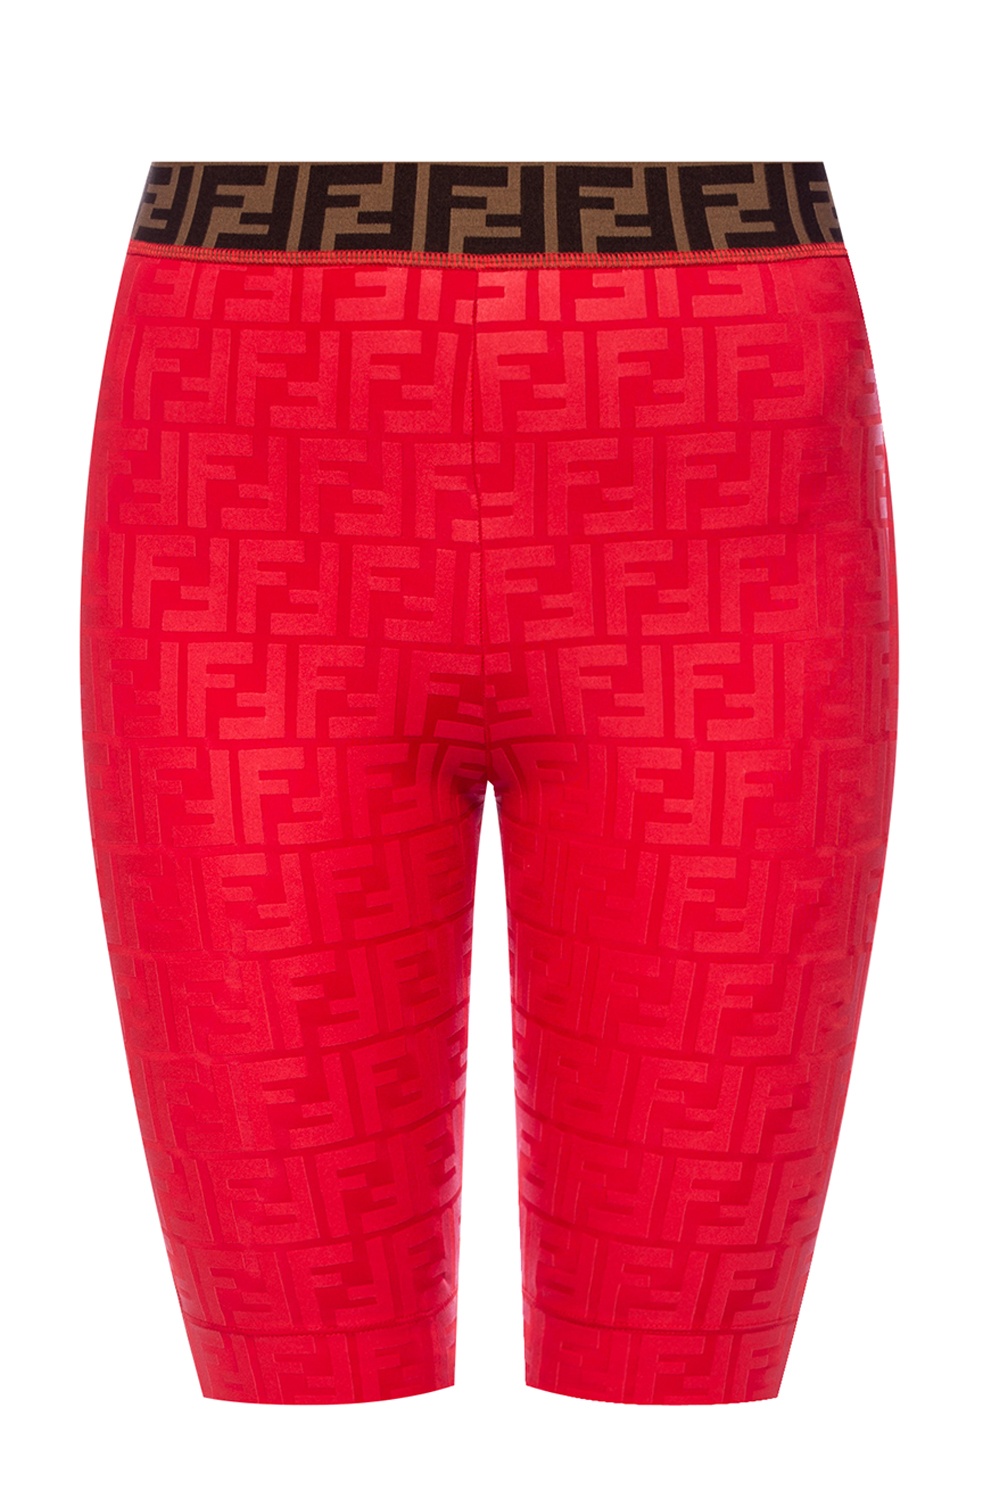 fendi red tights